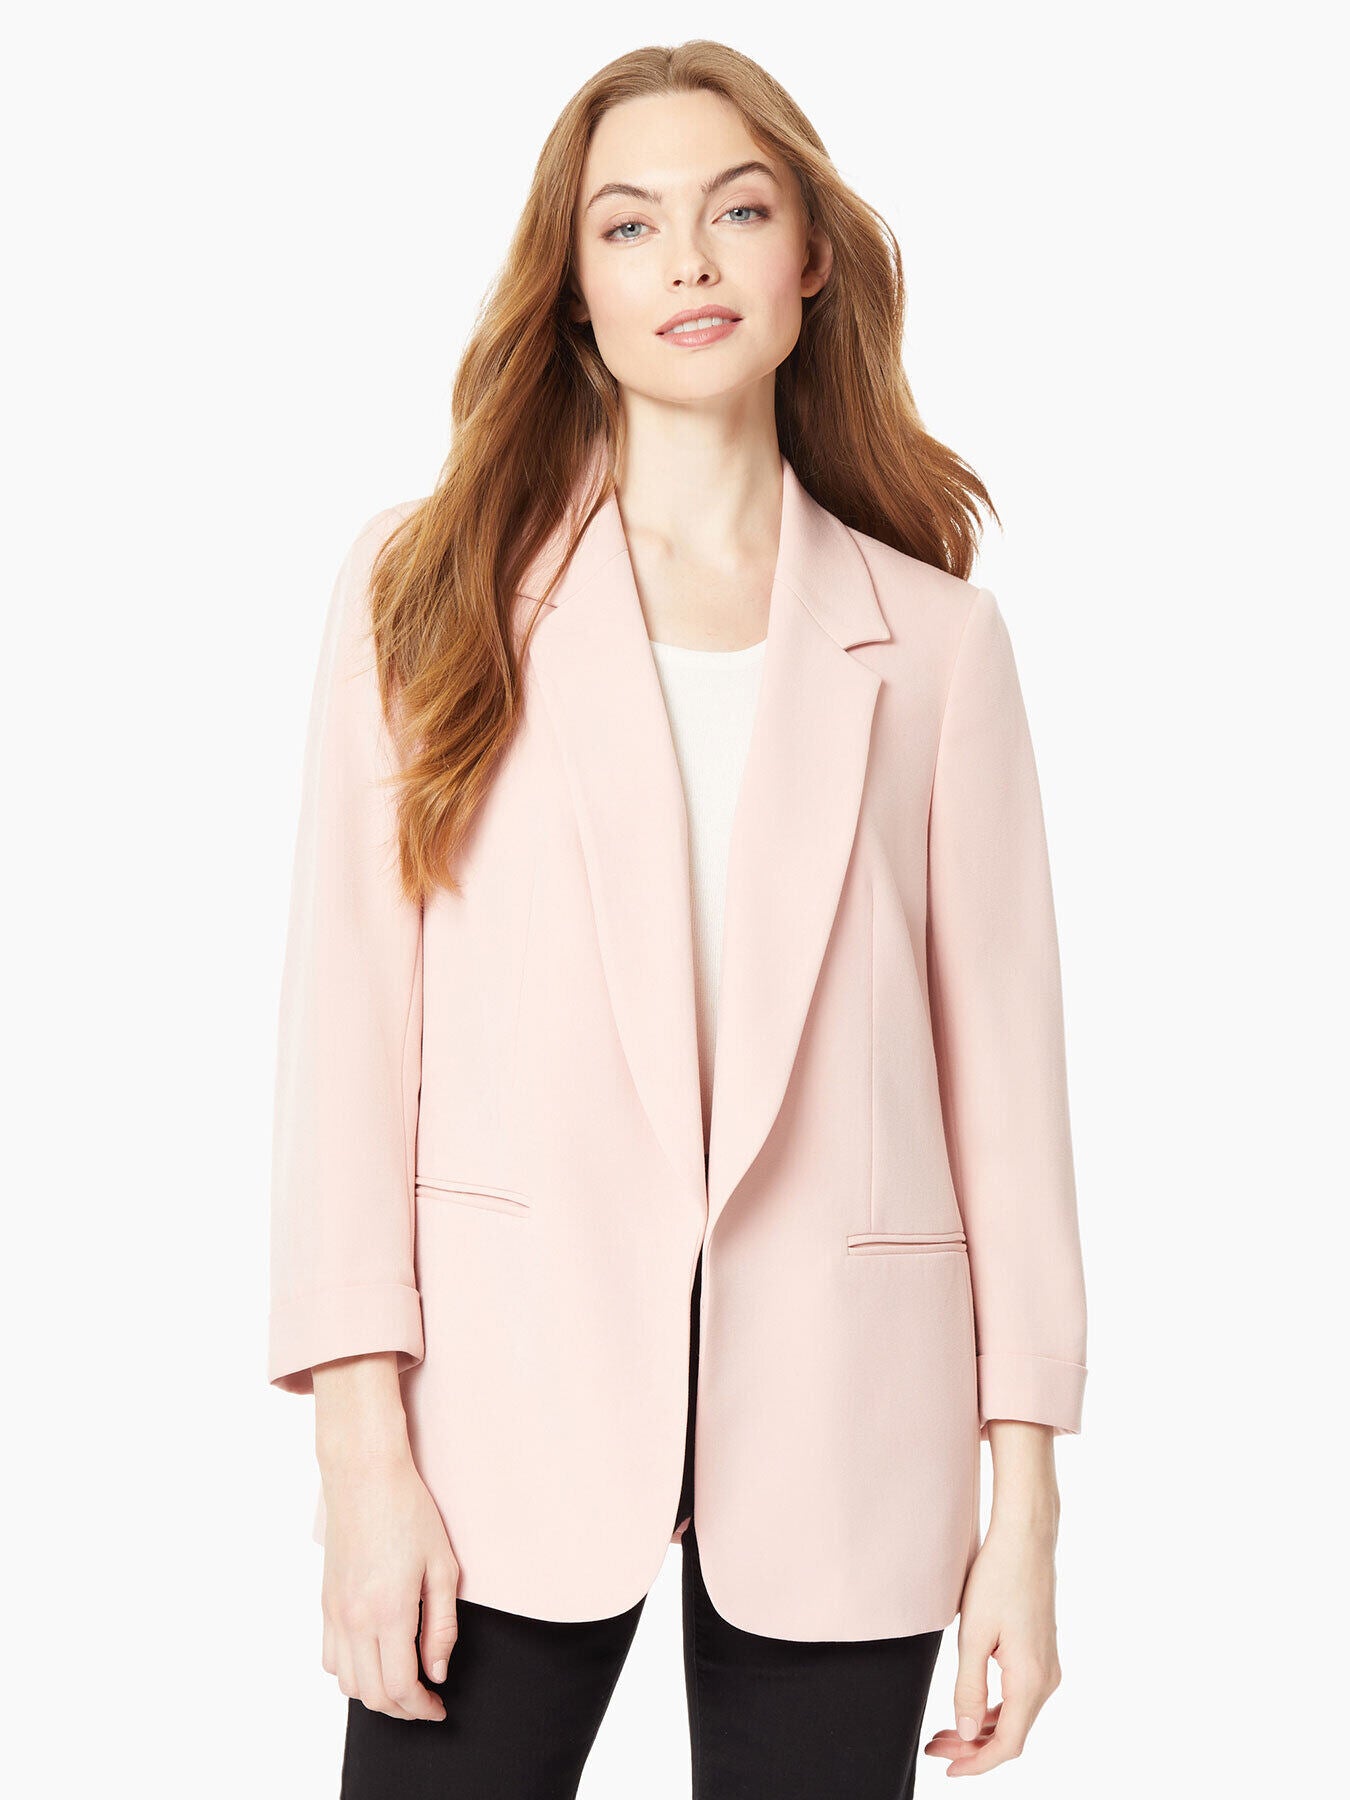 Notch Collar Blazer - Women's Pink Blazer | Jones New York